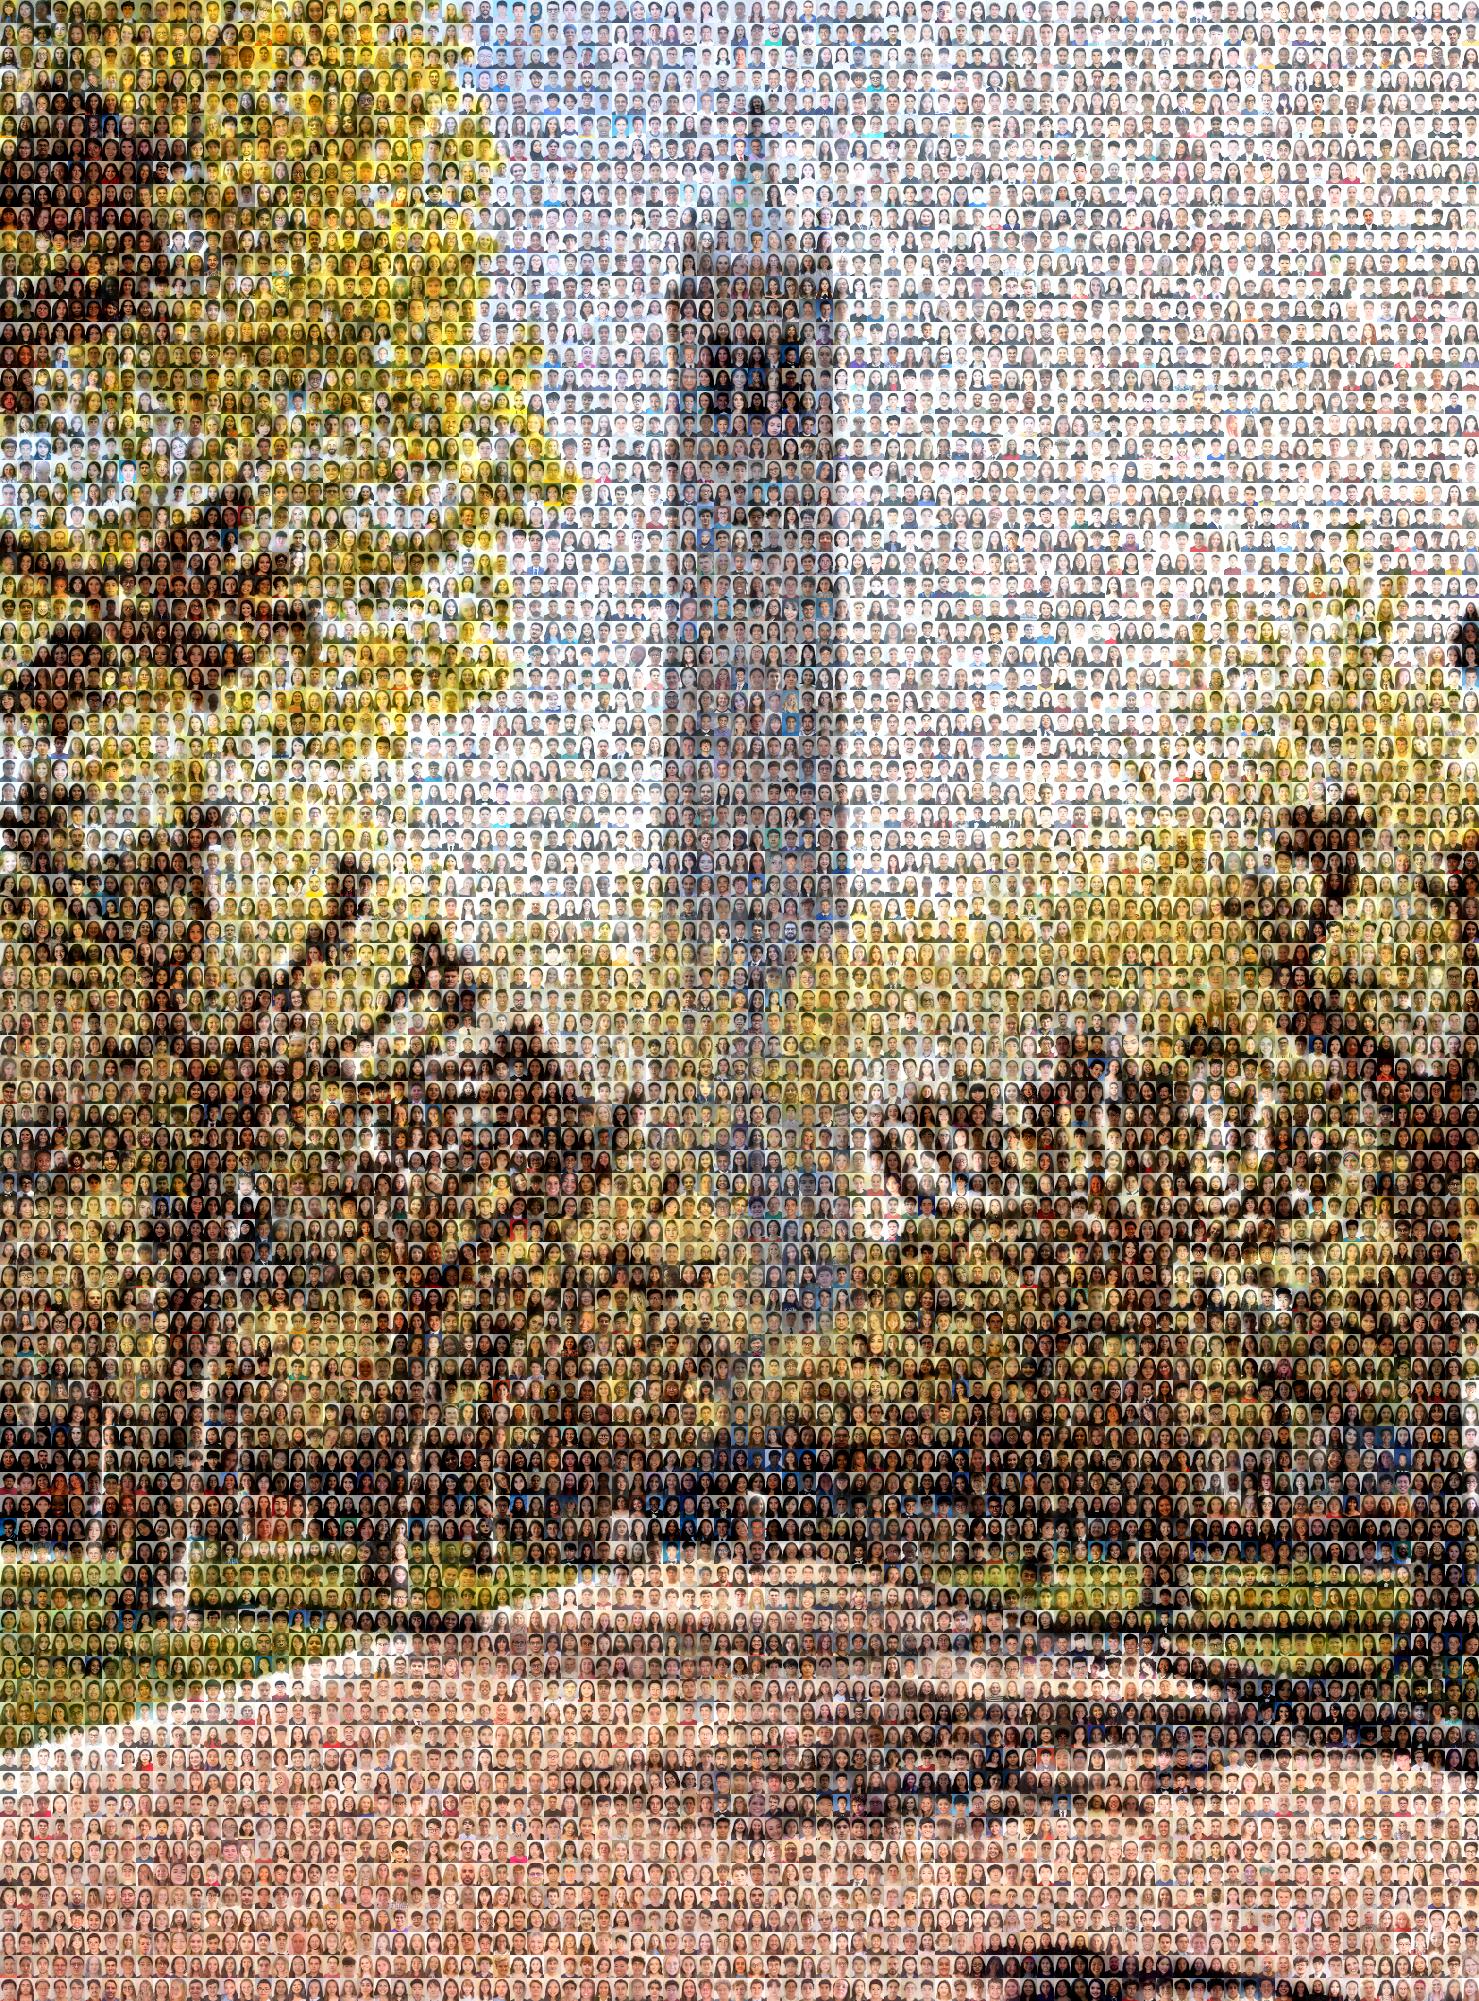 Berkeley Mosaic Photo Mosaic  Picture Mosaics